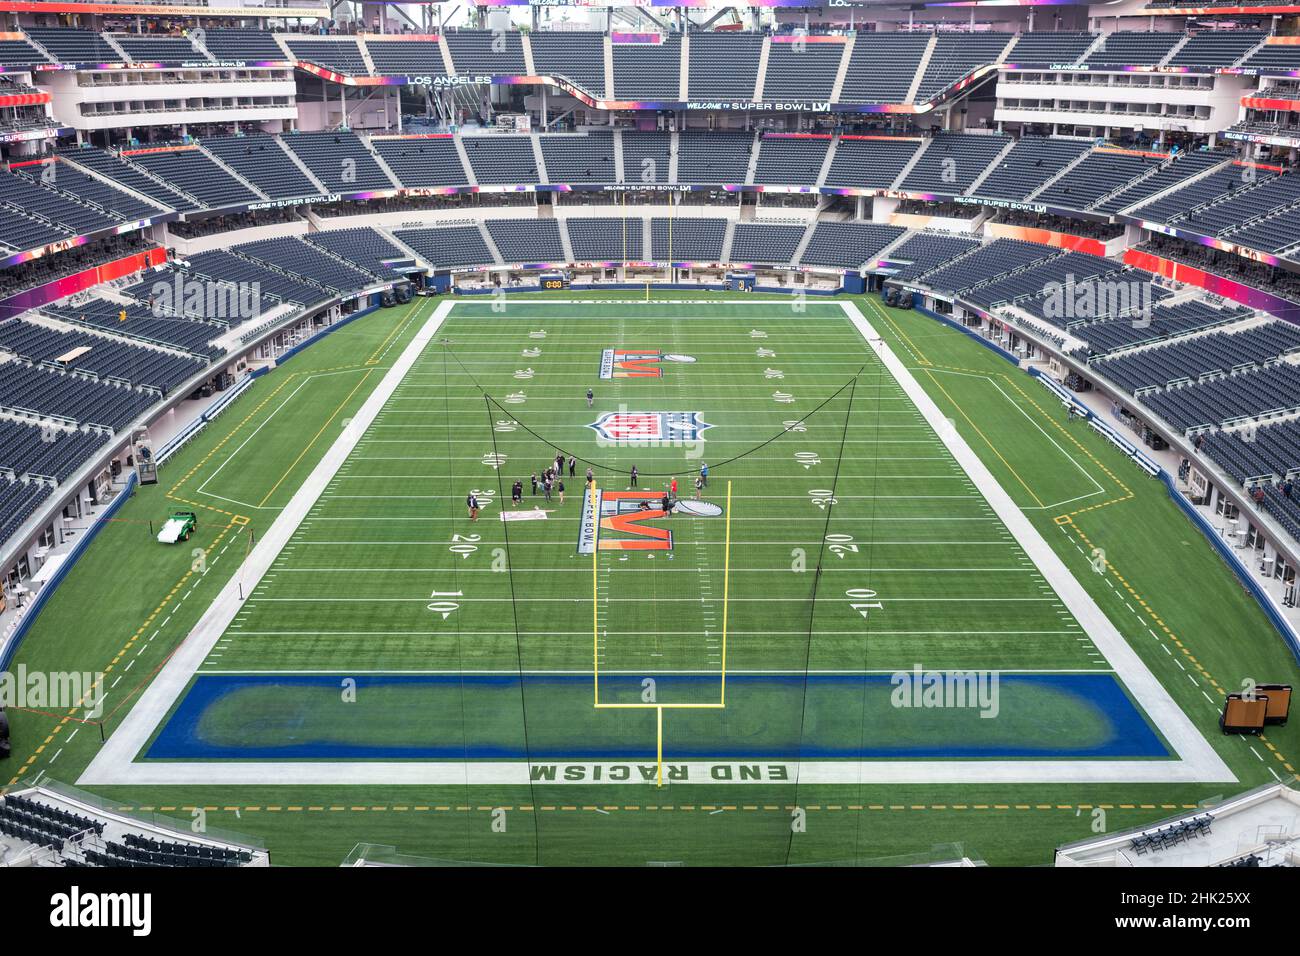 FIRST LOOK: SoFi Stadium field ready for Bengals, Super Bowl LVI